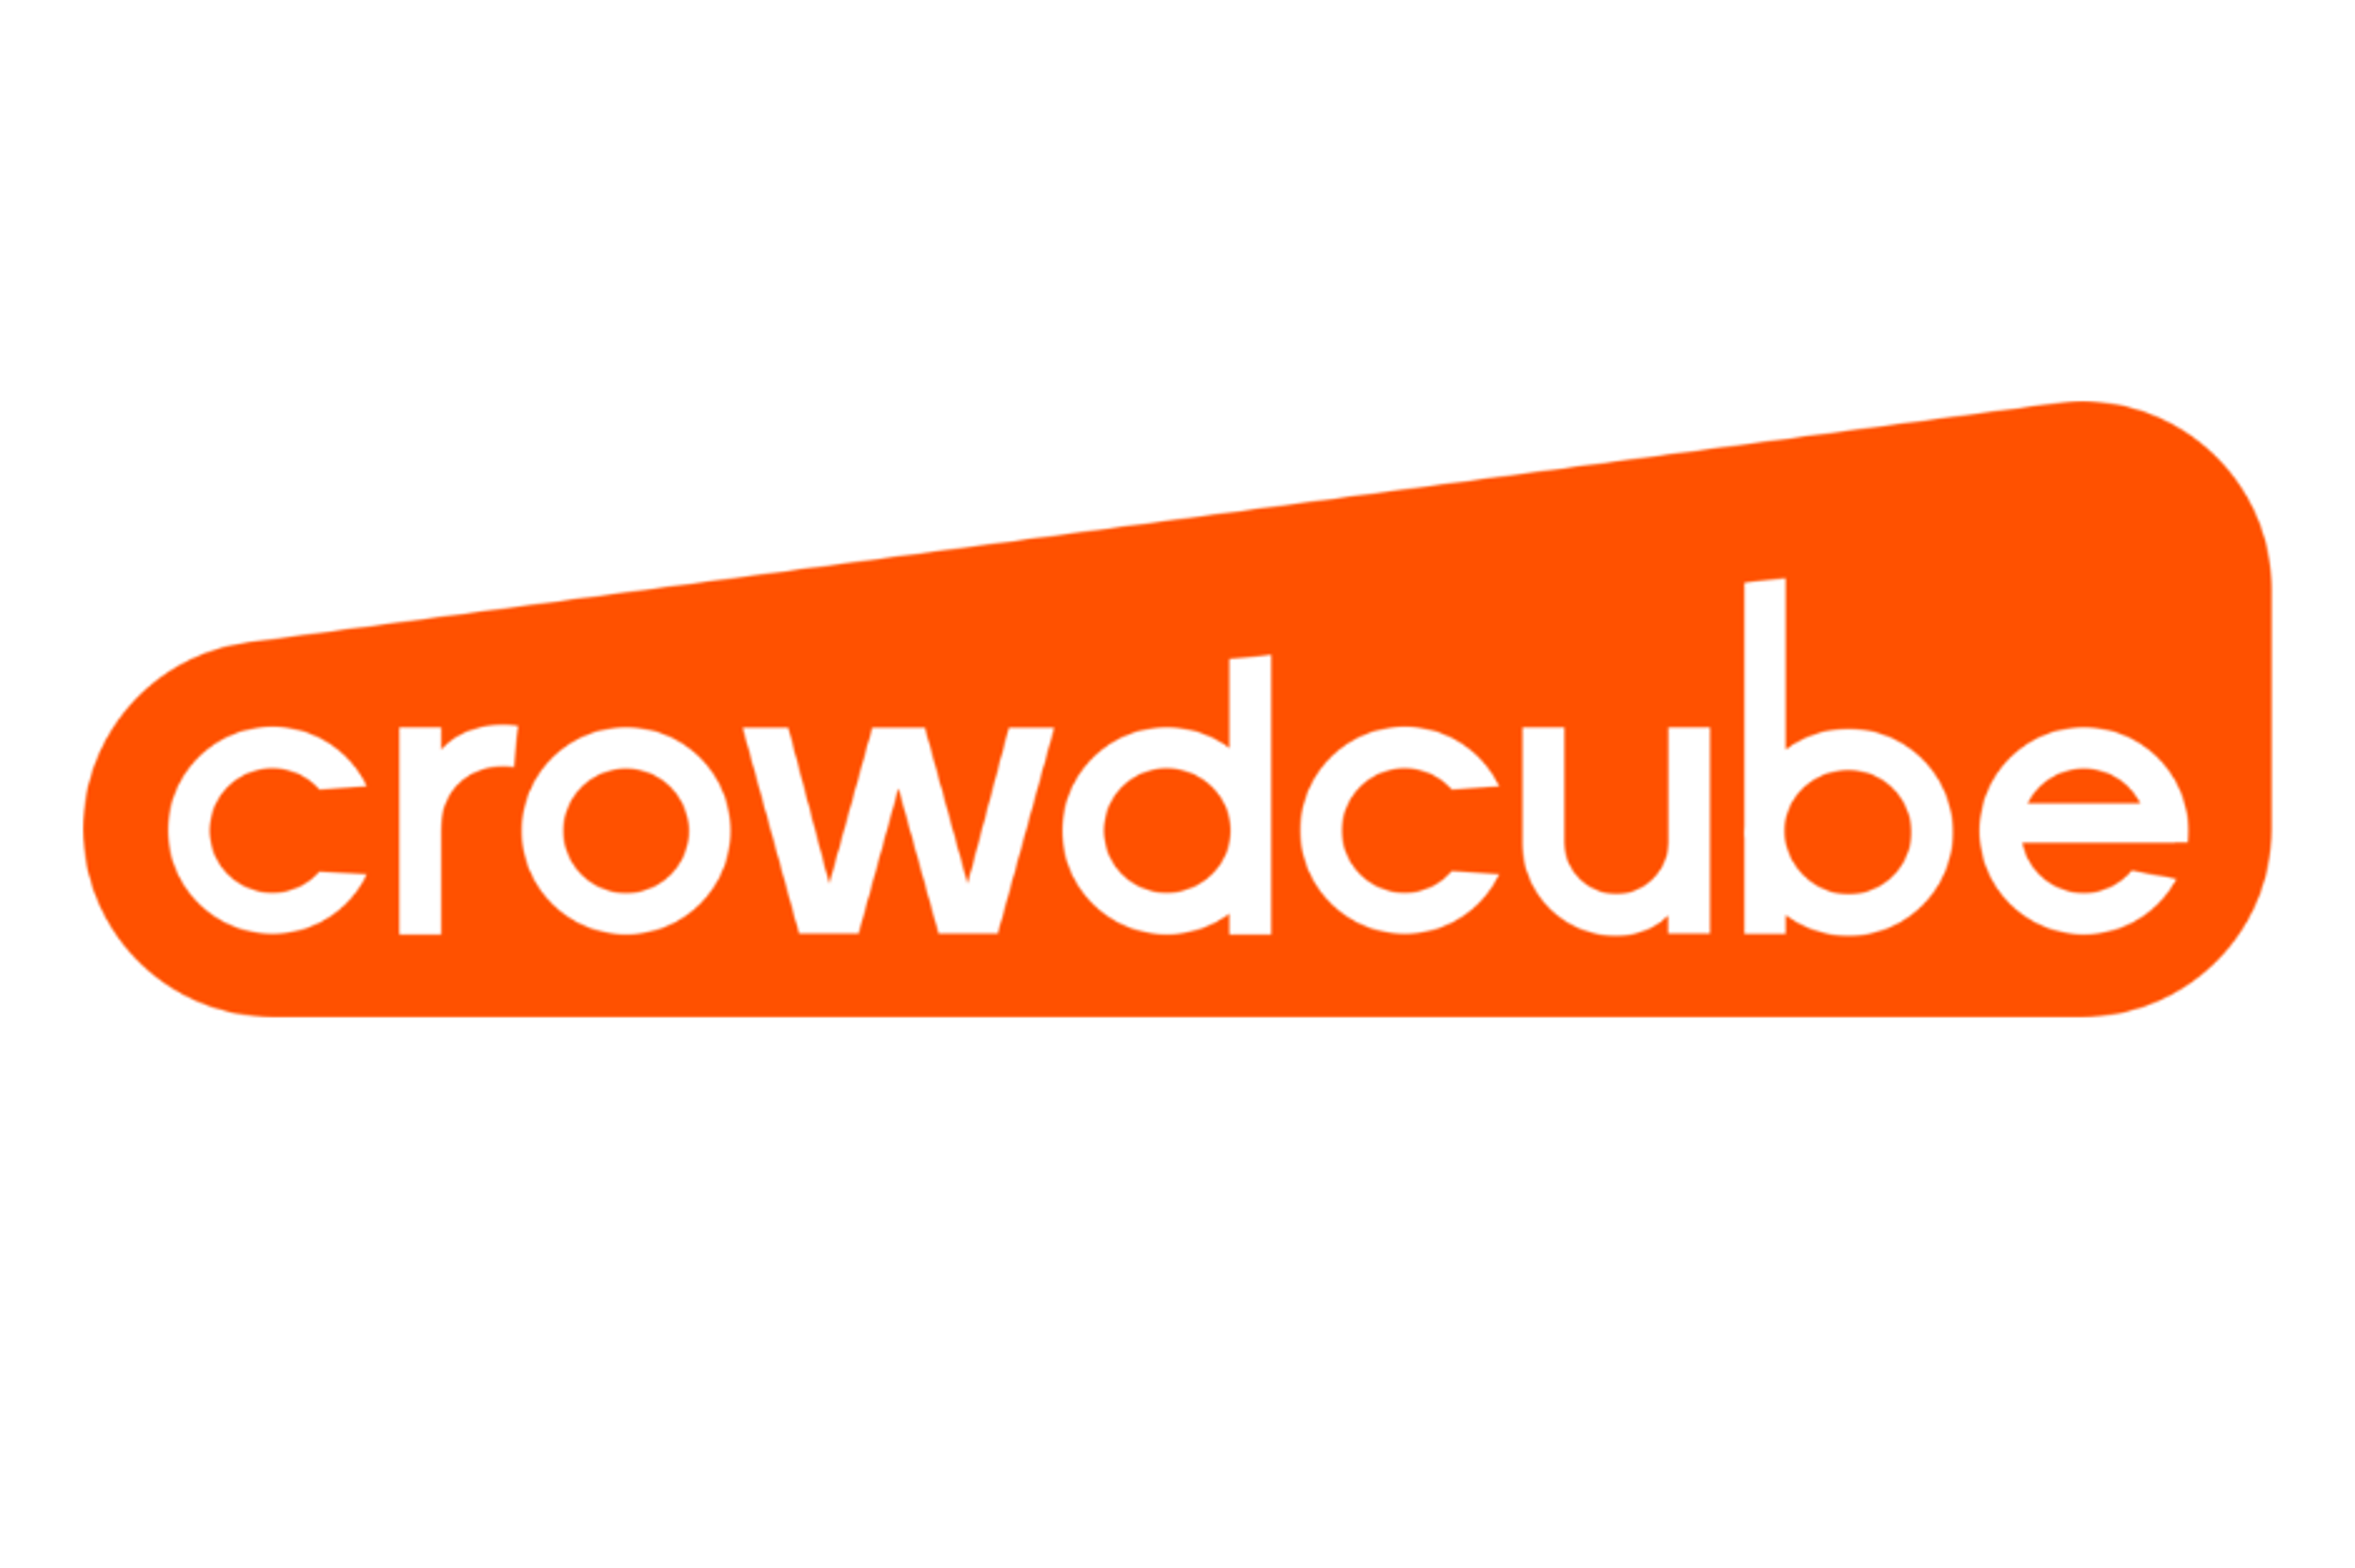 Crowcube's logo